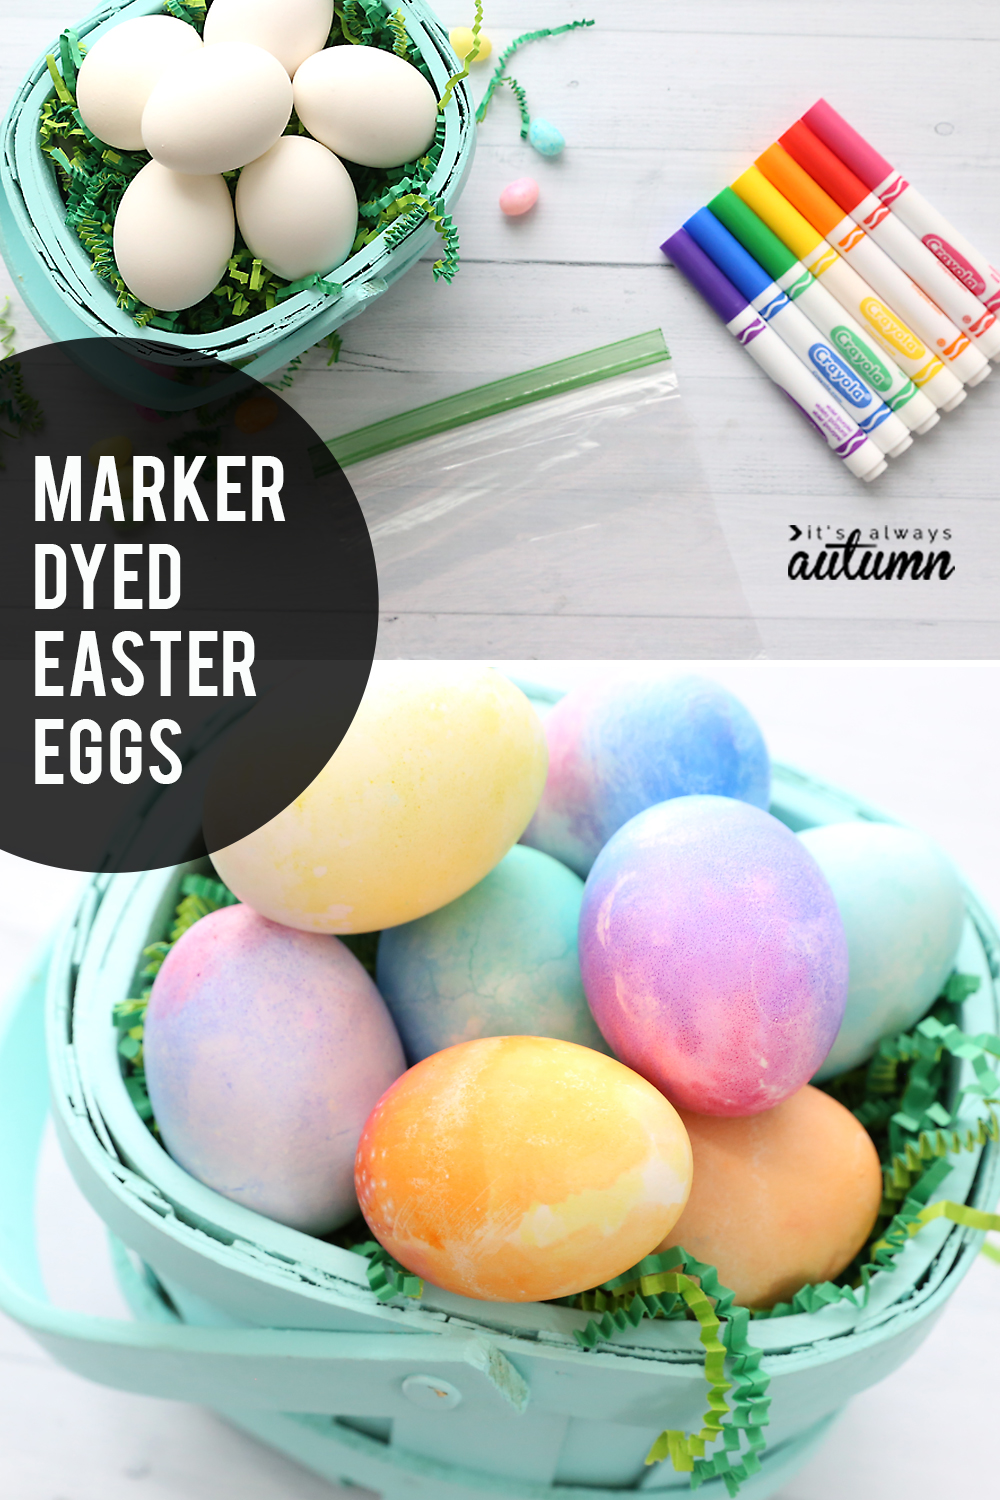 Marker dyed Easter eggs